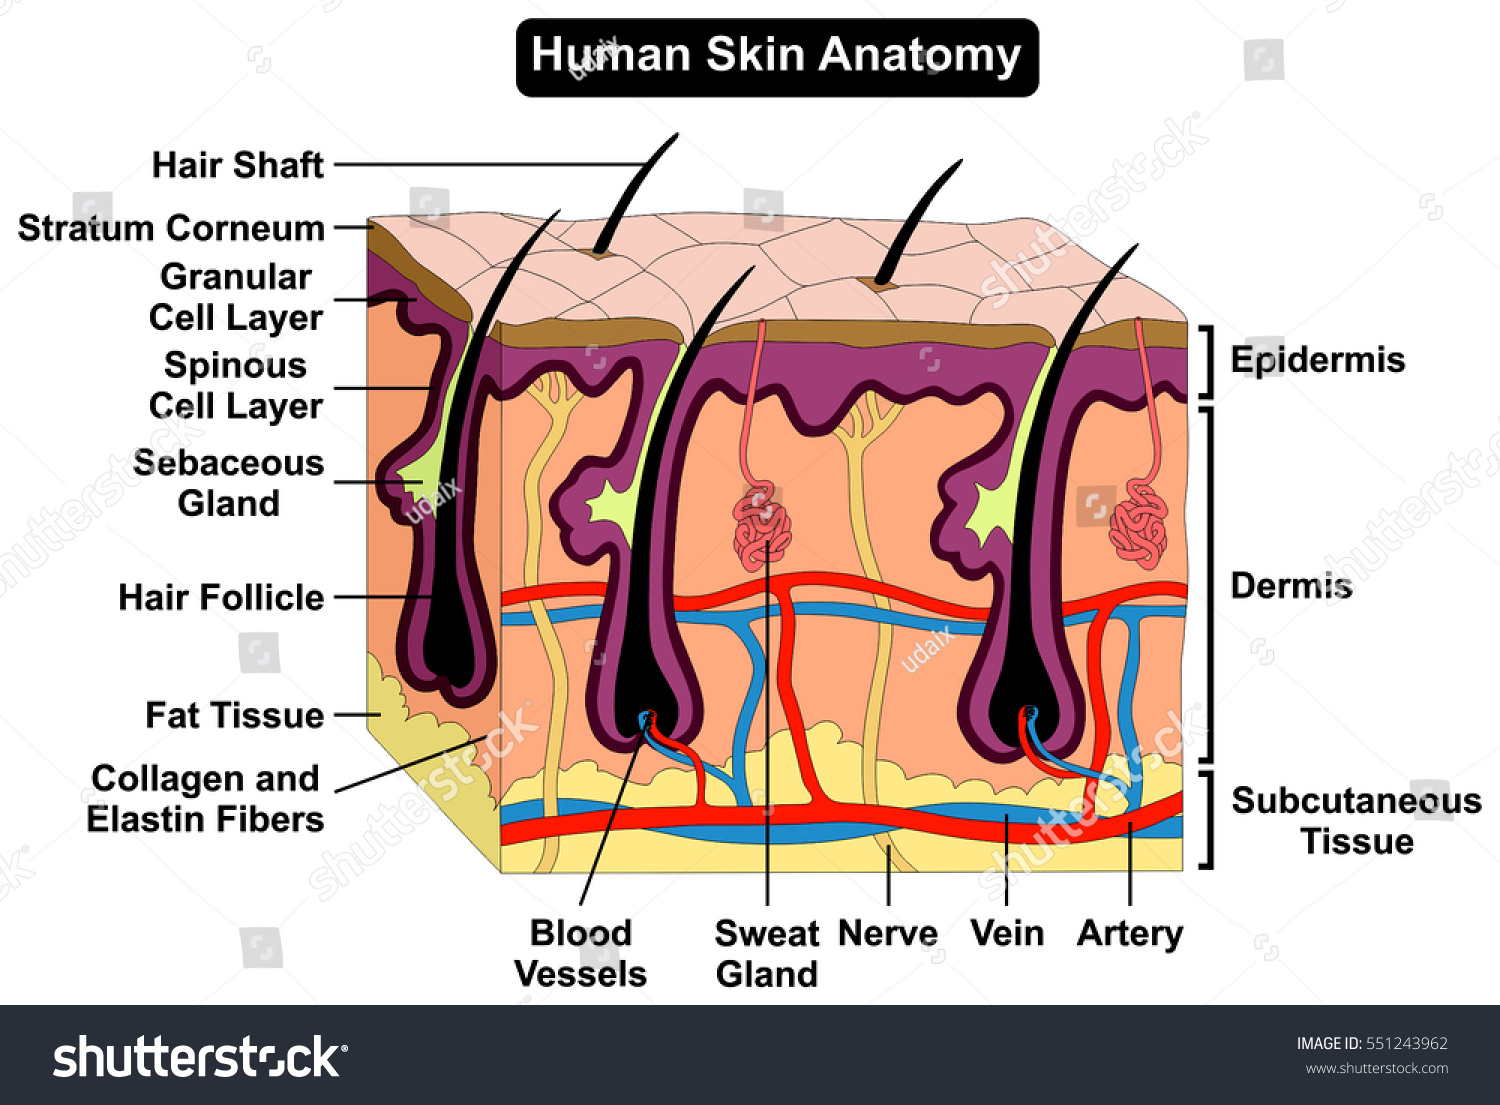 Human Skin Anatomy Cross Section Diagram Stock Illustration 551217682 ...